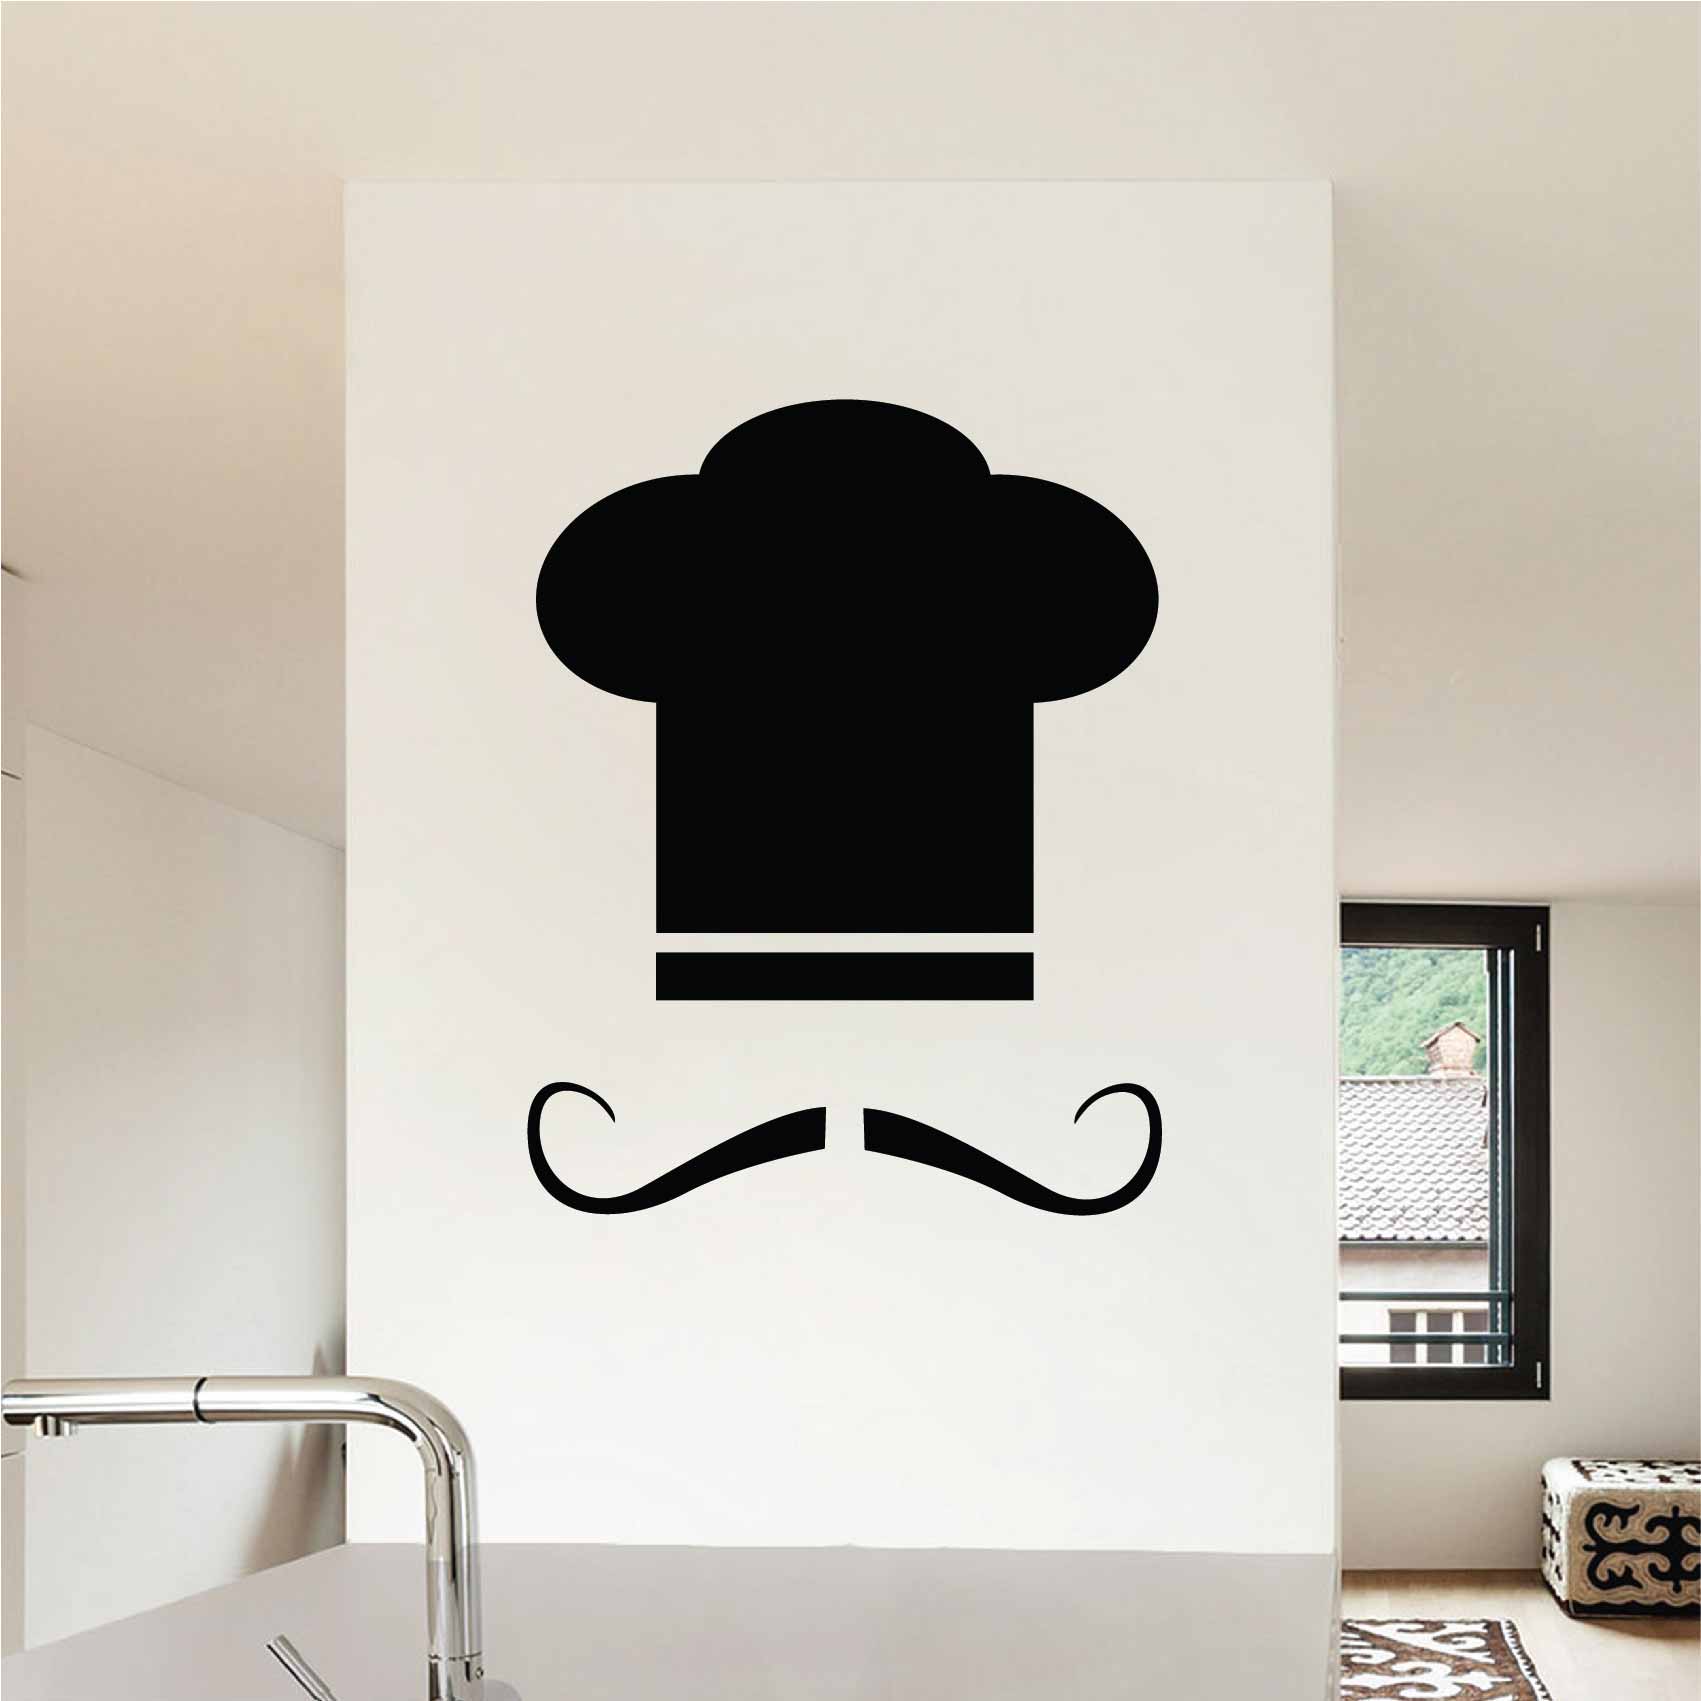 Stickers Cuisine Chef Dessin - Autocollant muraux et deco